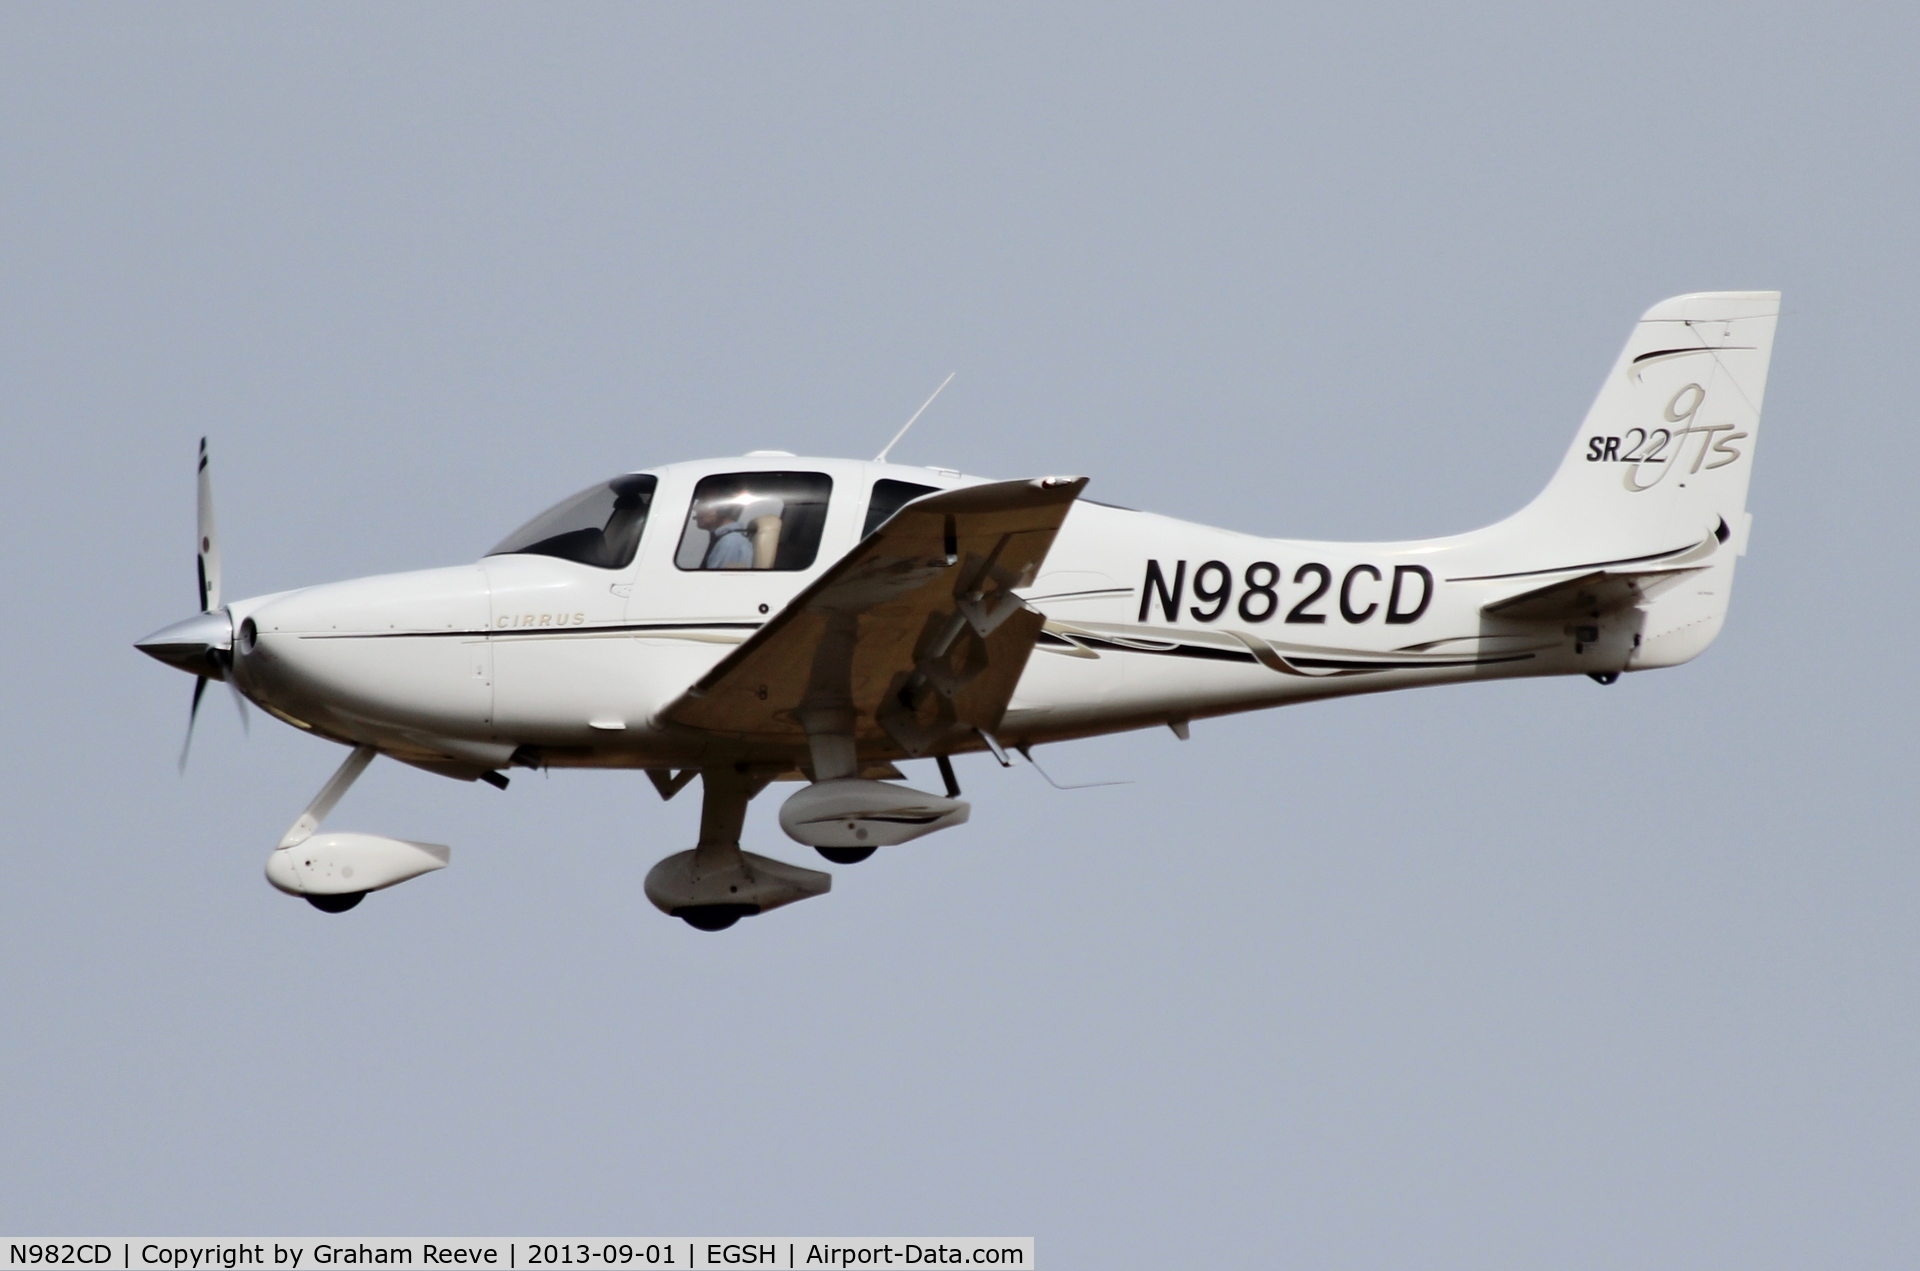 N982CD, 2006 Cirrus SR22 GTS C/N 1853, About to land.